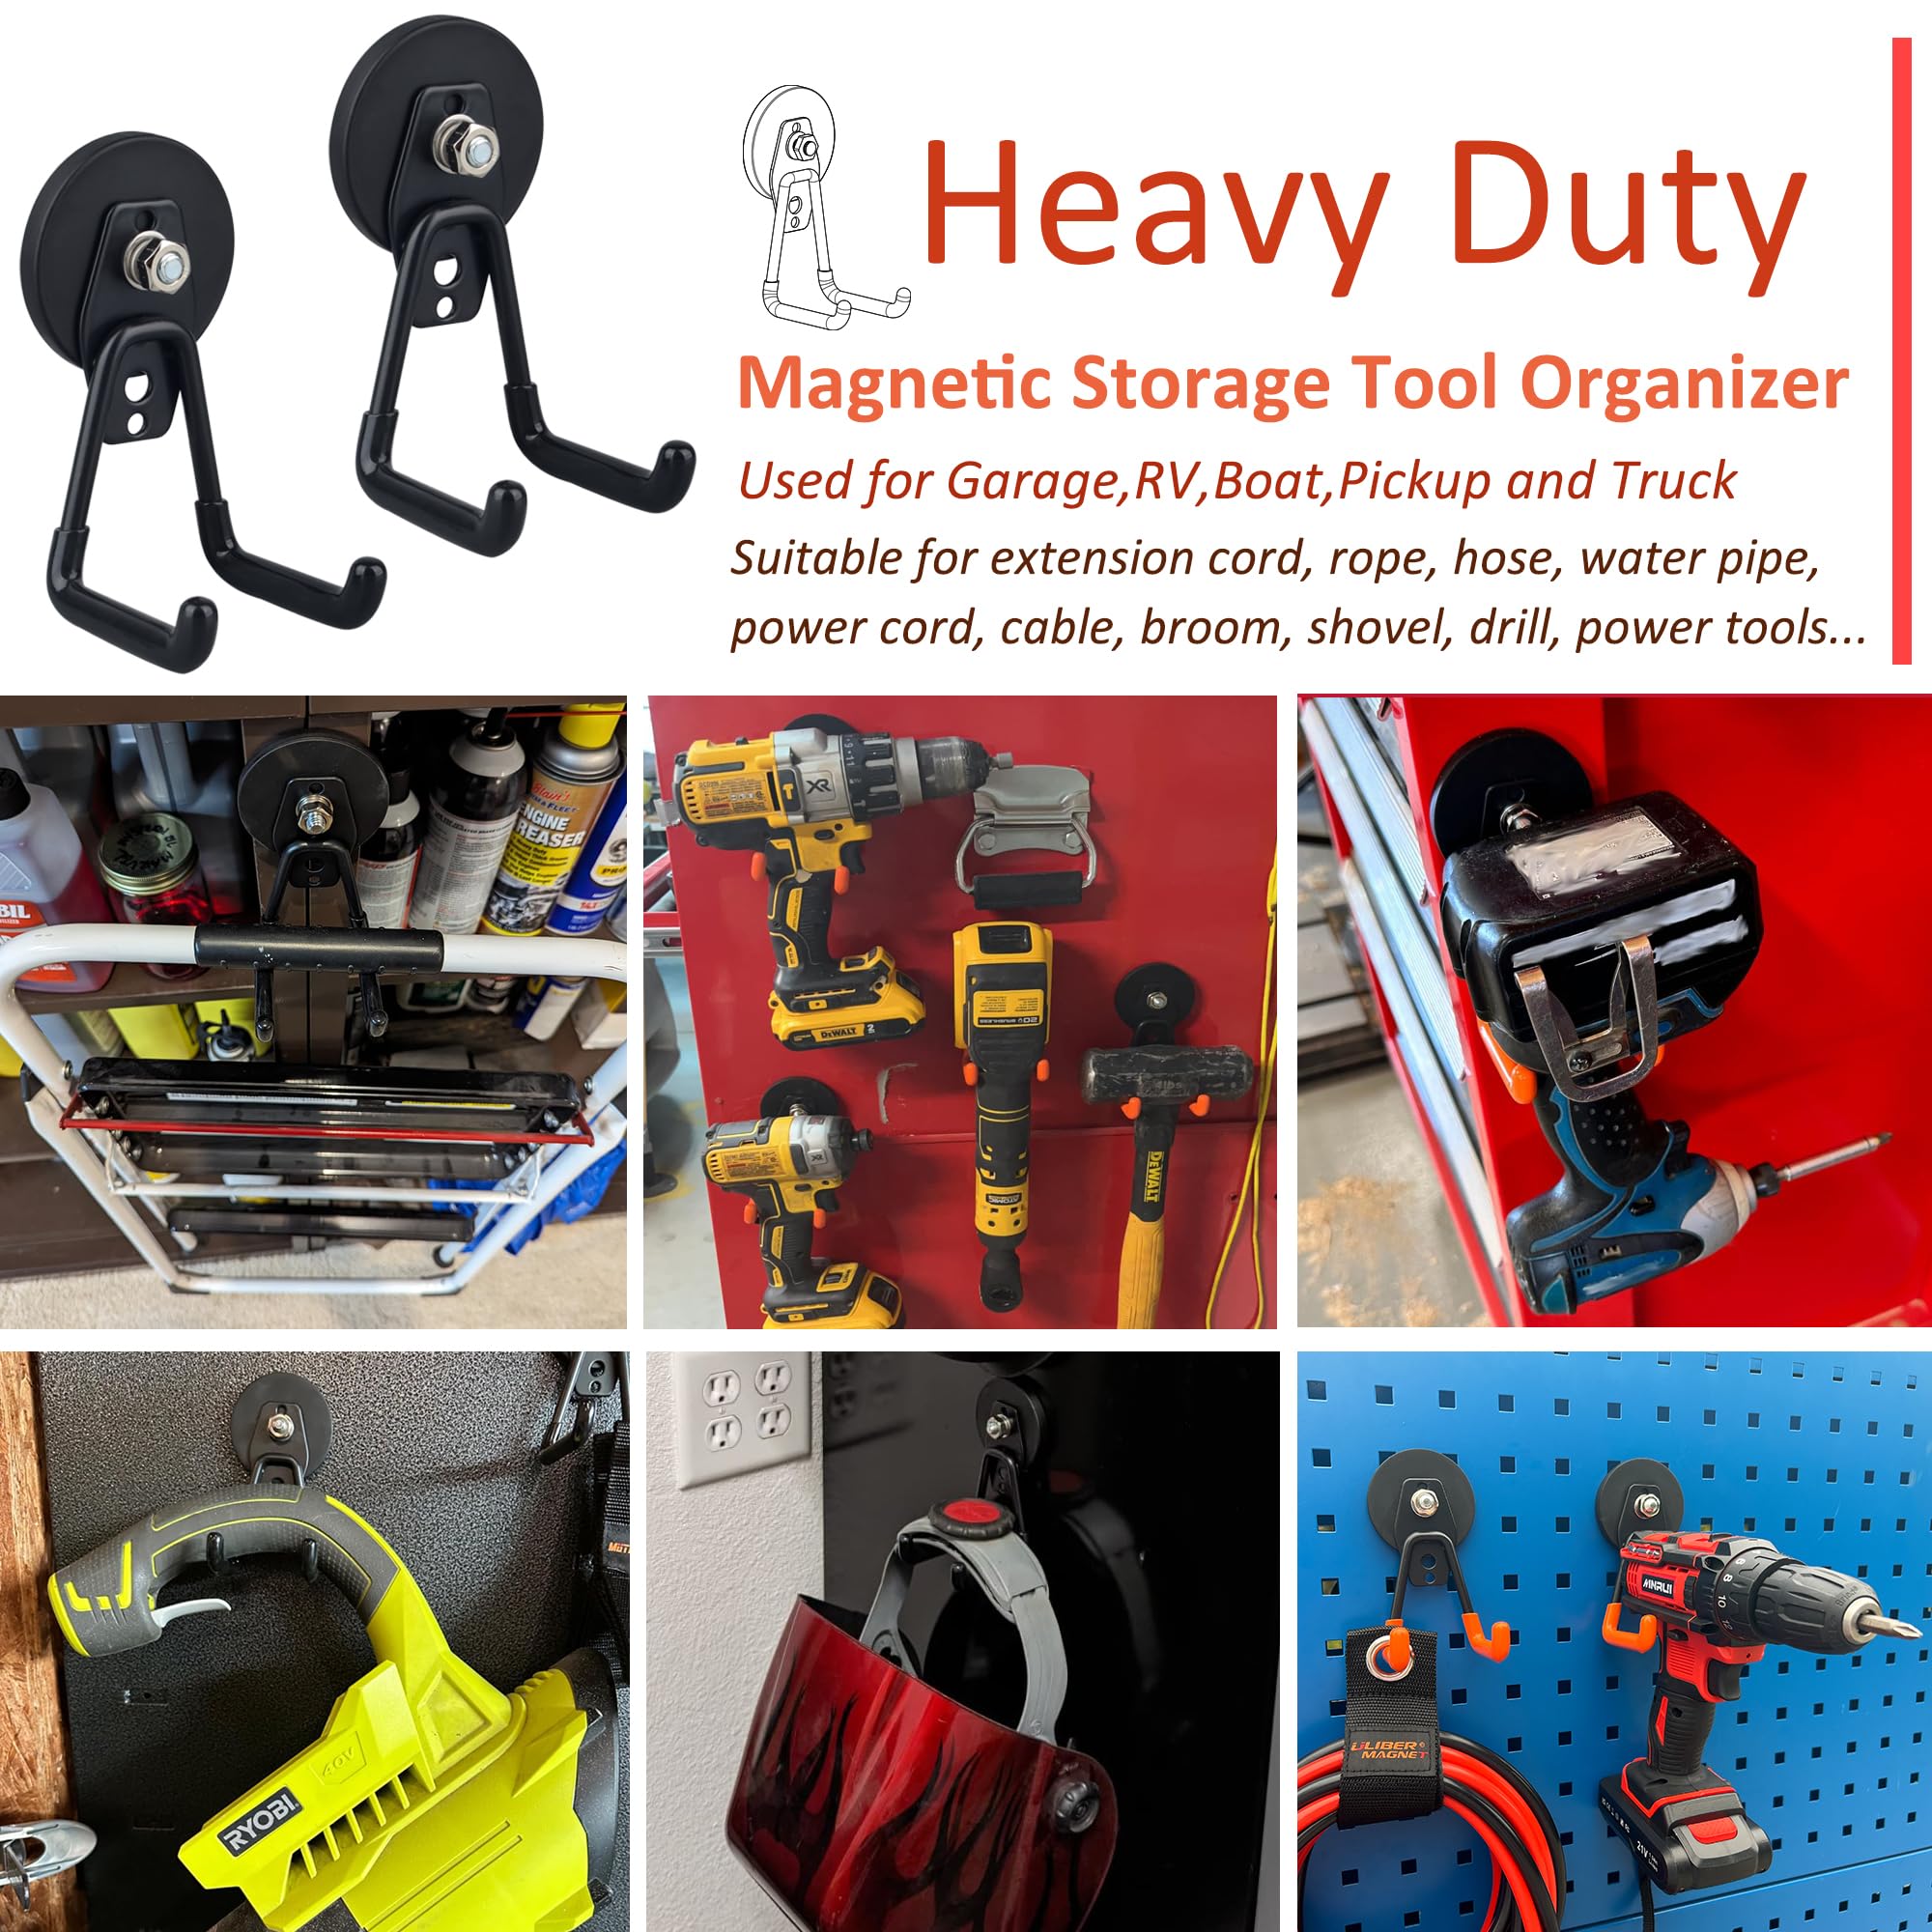 ULIBERMAGNET Strong Garage Magnetic Hooks, 2 Pack Heavy Duty Storage Utility Magnet Hooks with Anti-Slip Coating for Indoor & Outdoor Hanging (Black)